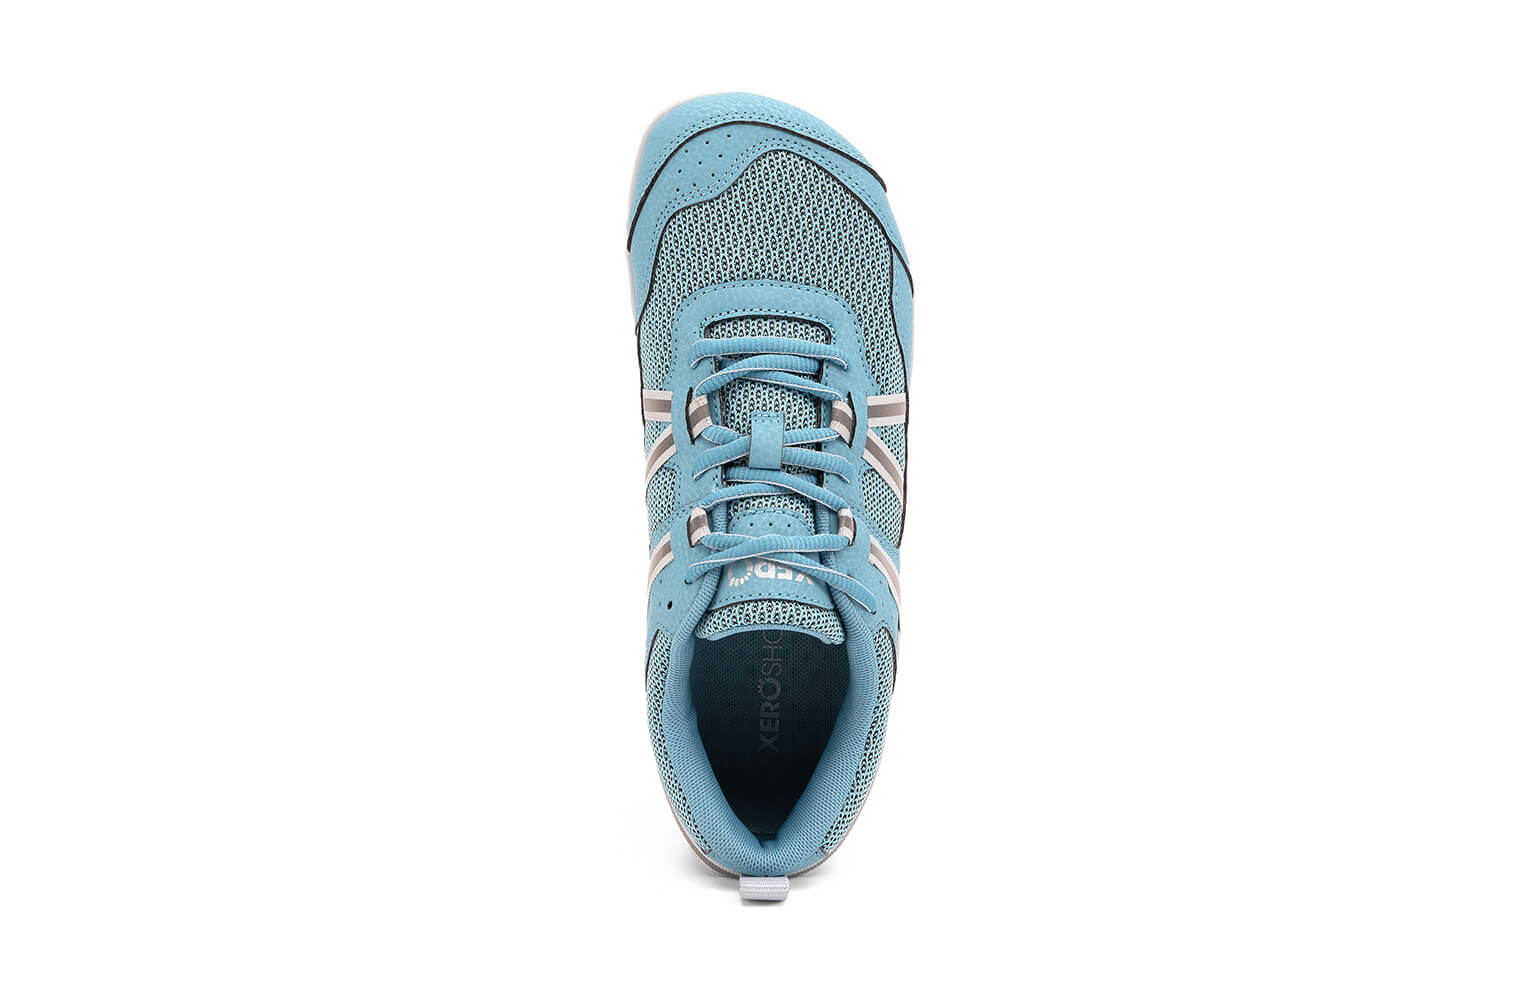 Women's Lightweight Minimalist Running Fitness Shoe - Xero Shoes